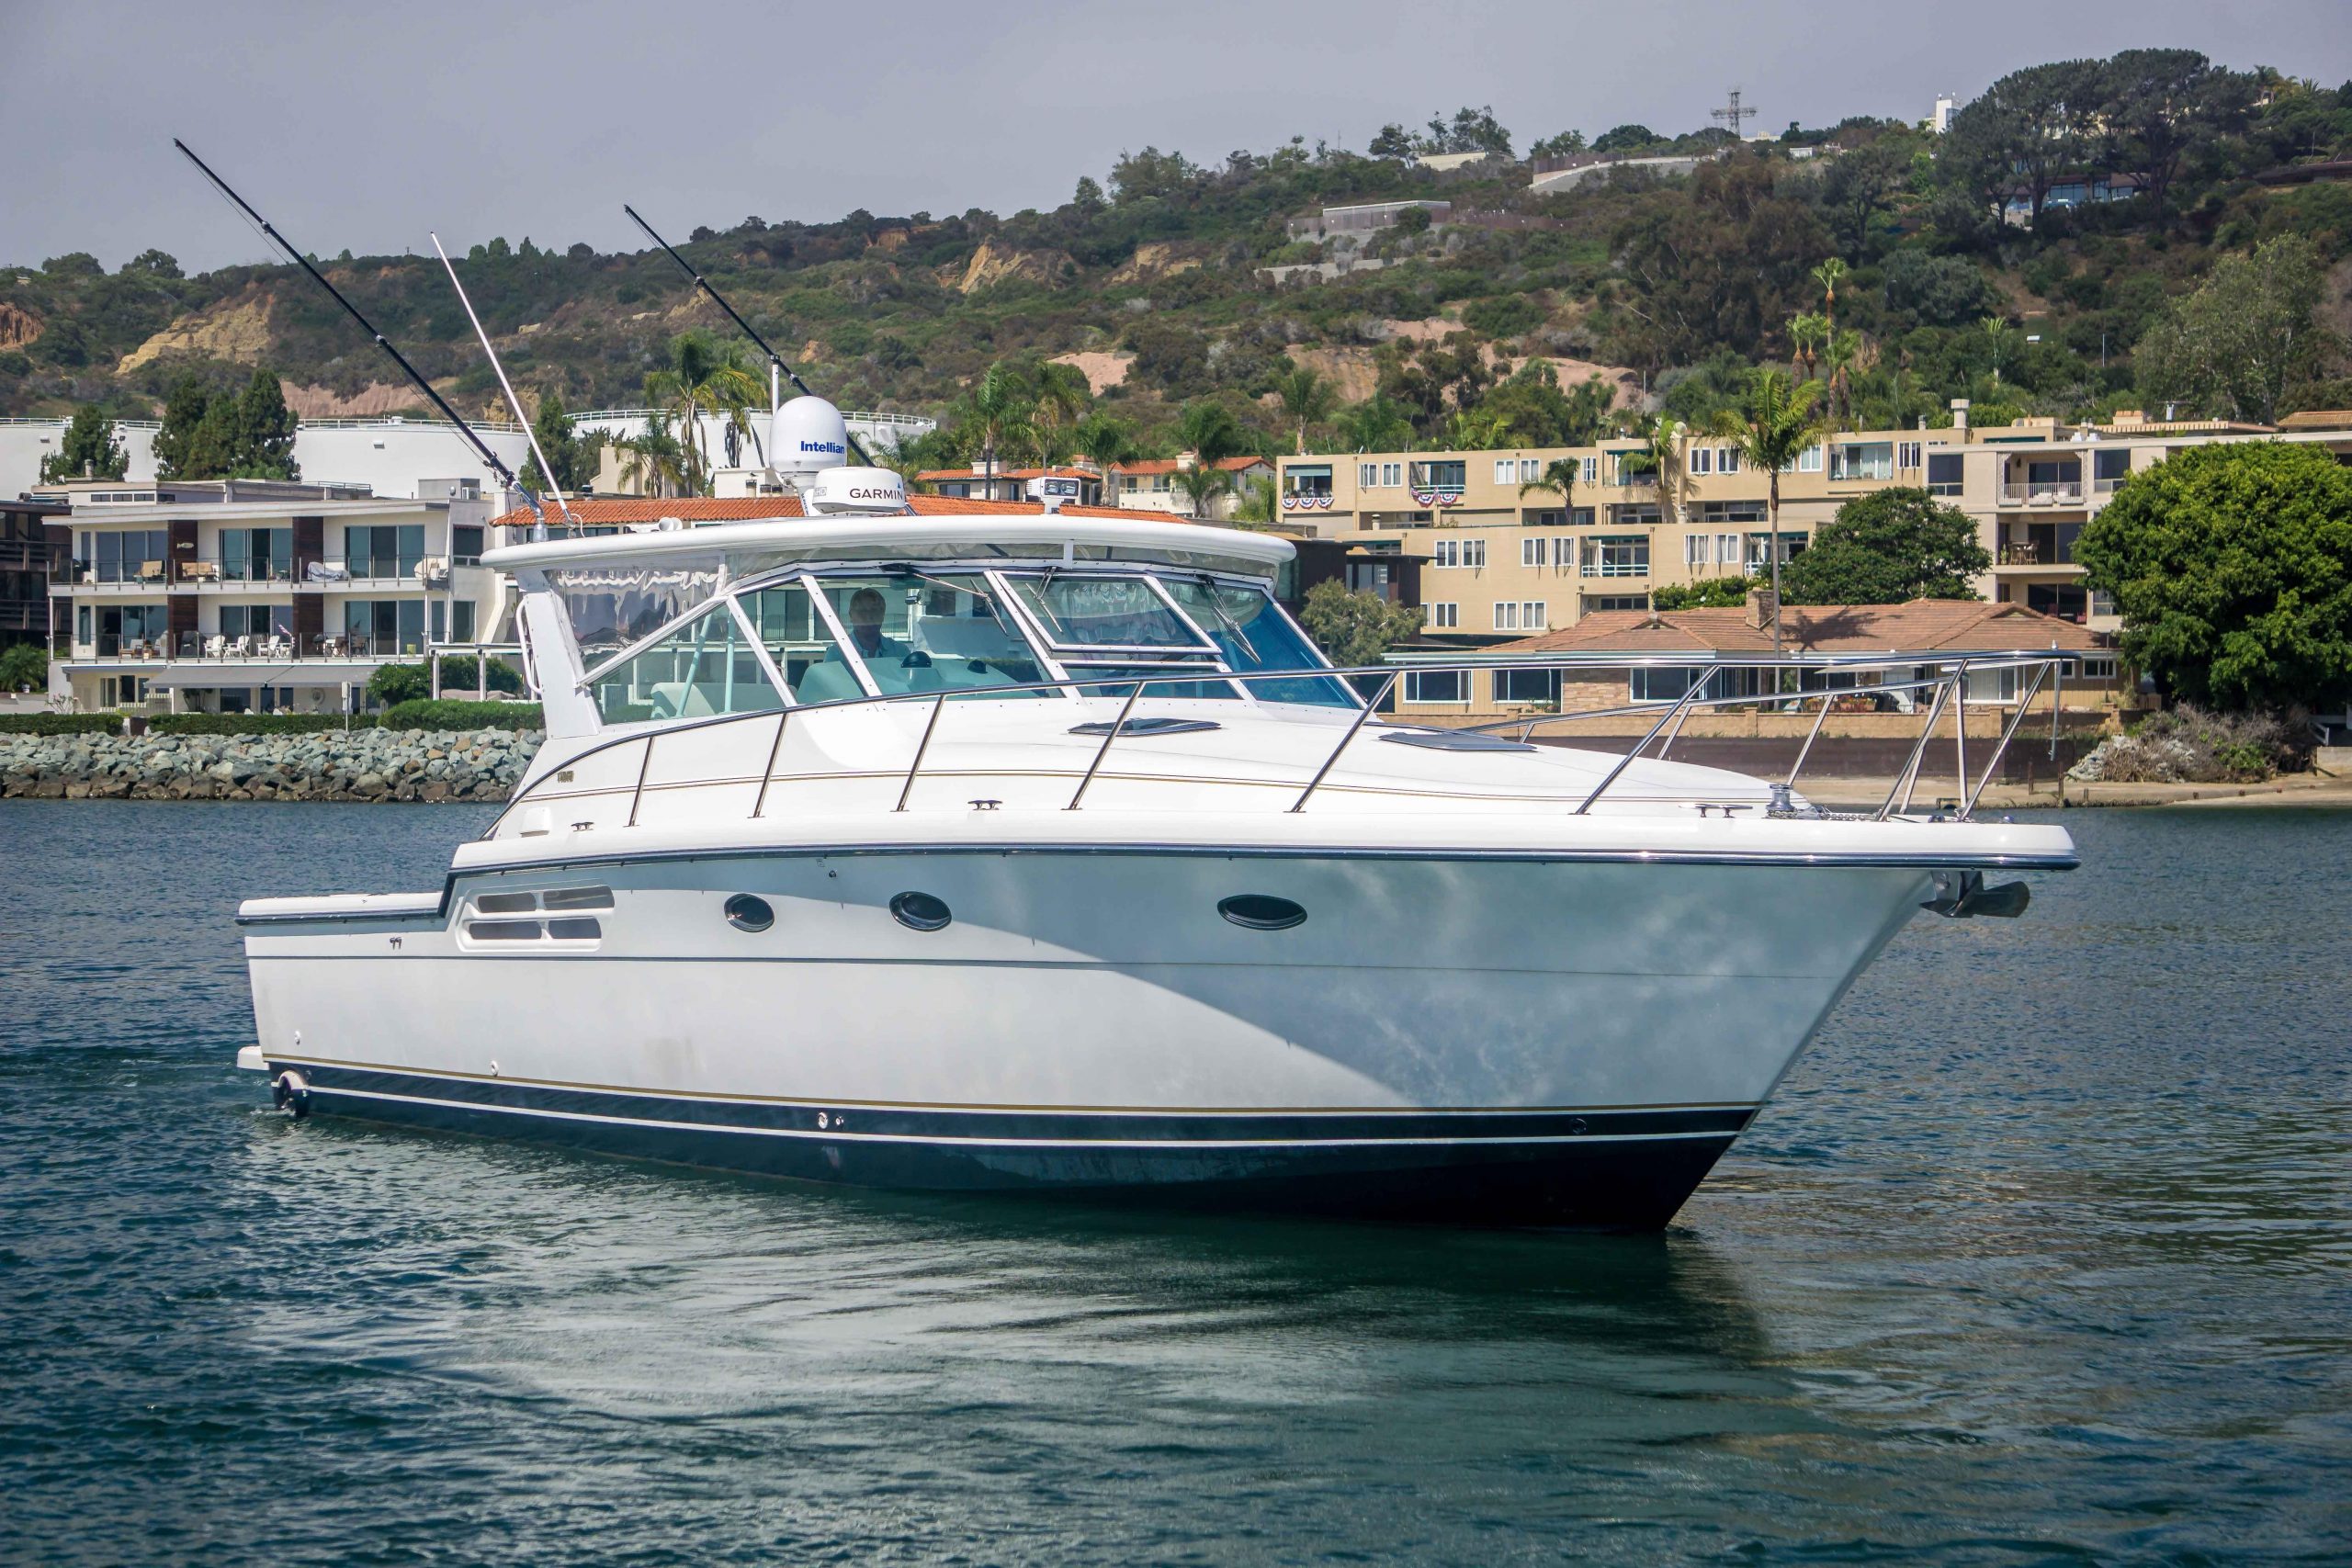 tiara yacht for sale california